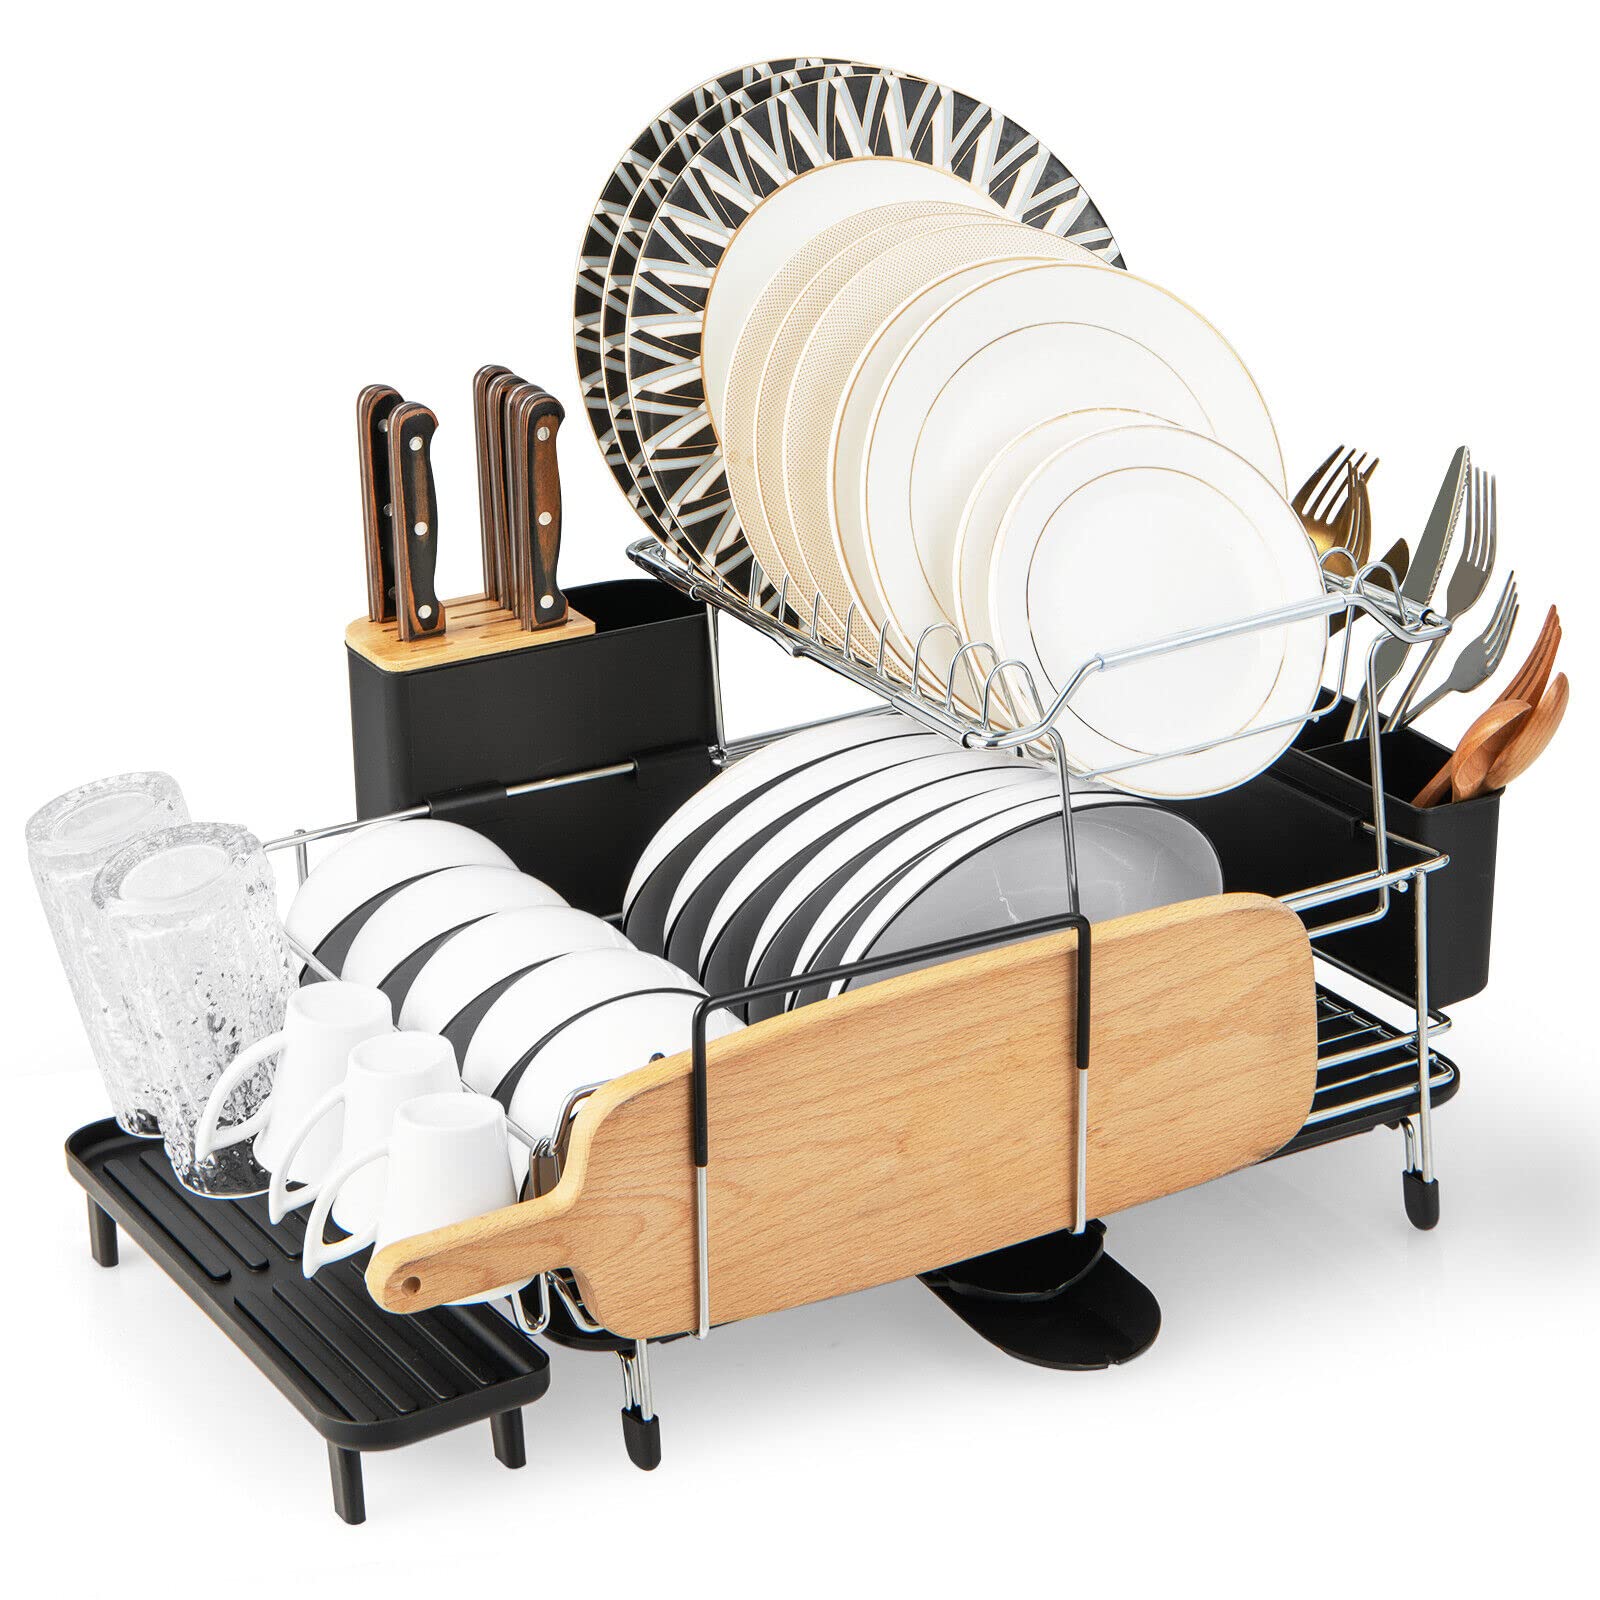 Giantexus Giantex Large Dish Drying Rack and Drainboard Set